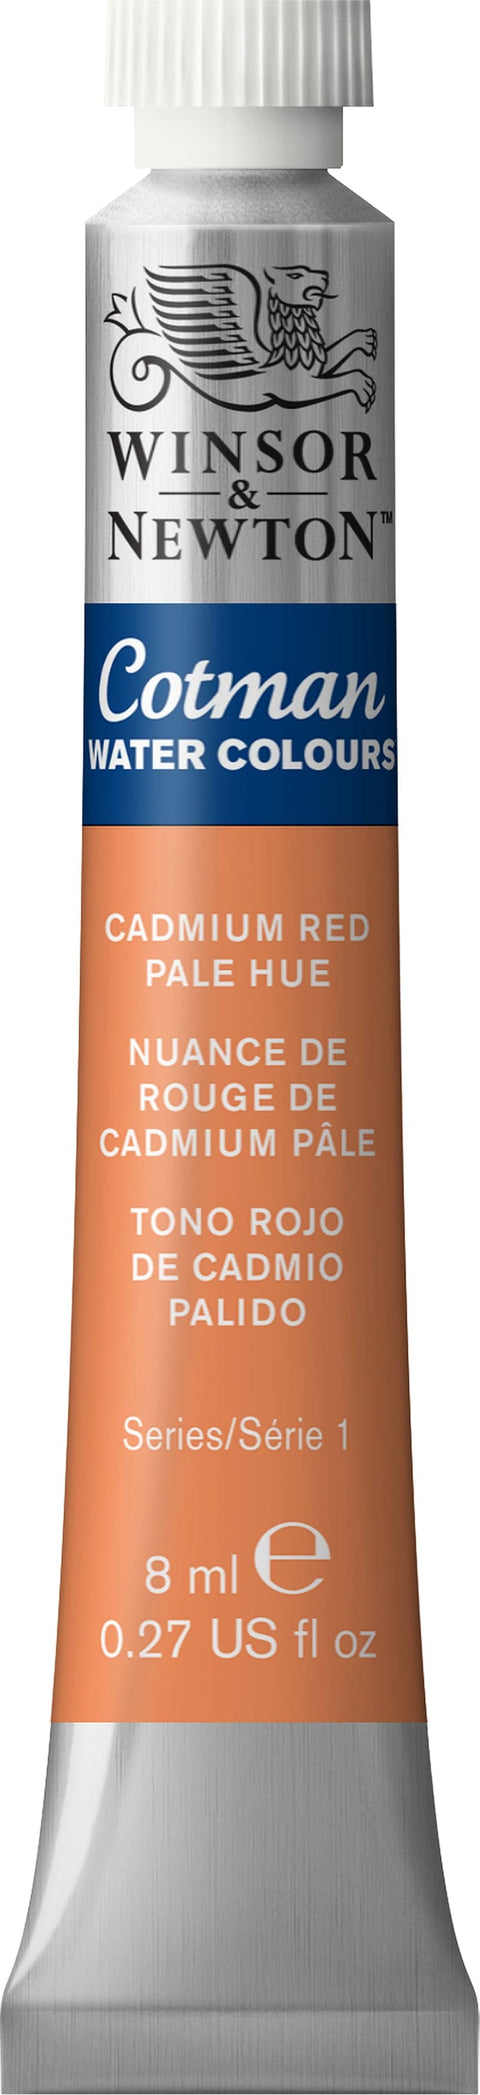 Winsor & Newton Cotman Water Colours 8ml-Cadmium Red Pale Hue